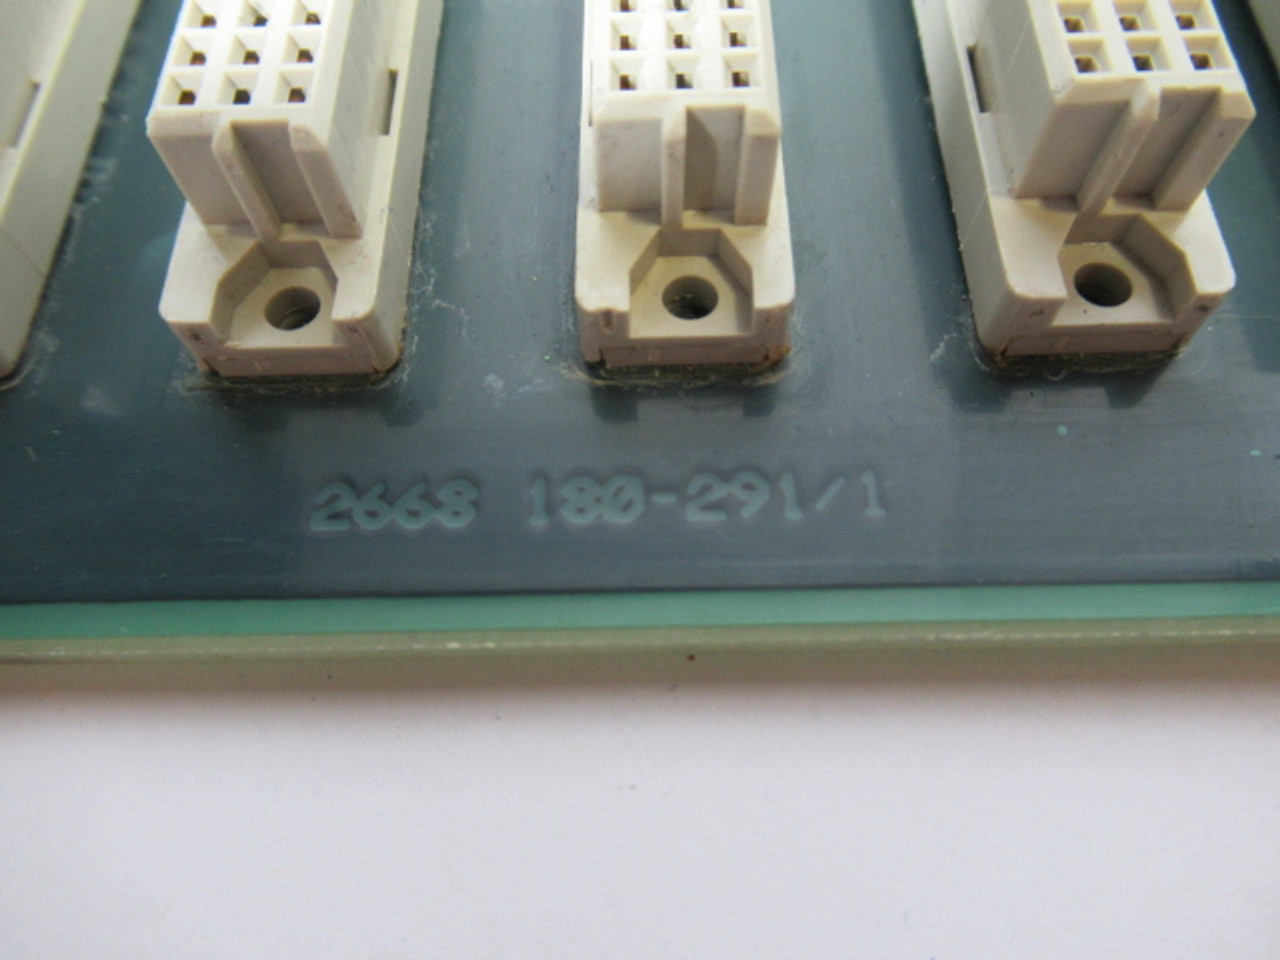 Asea 2668 180-291/1 21 Slot Control Board USED